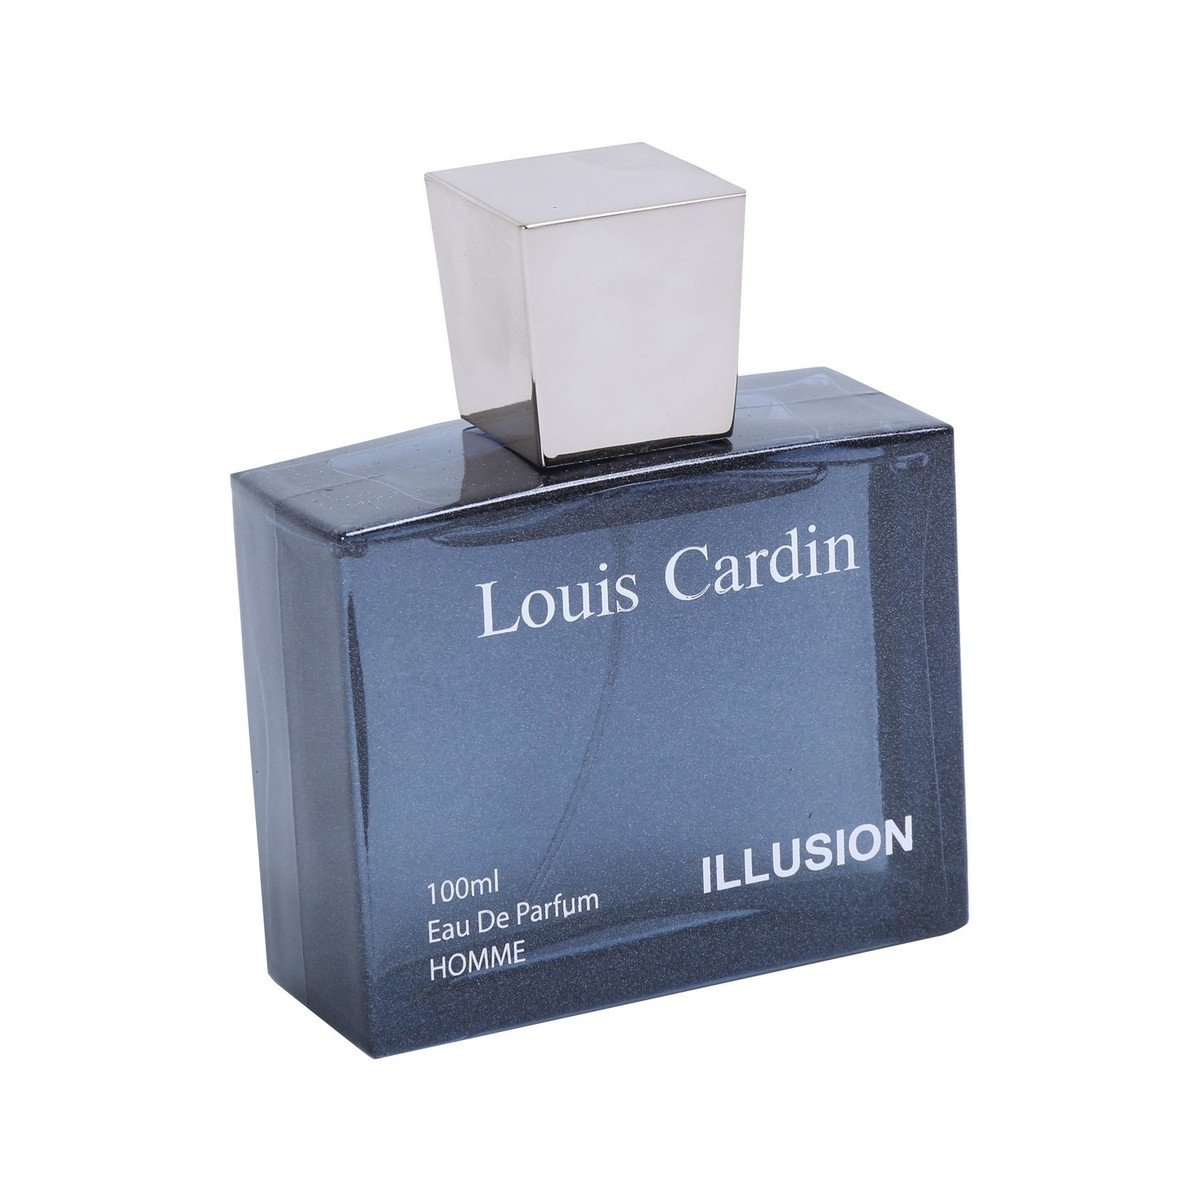 Louis Cardin illusion Perfume